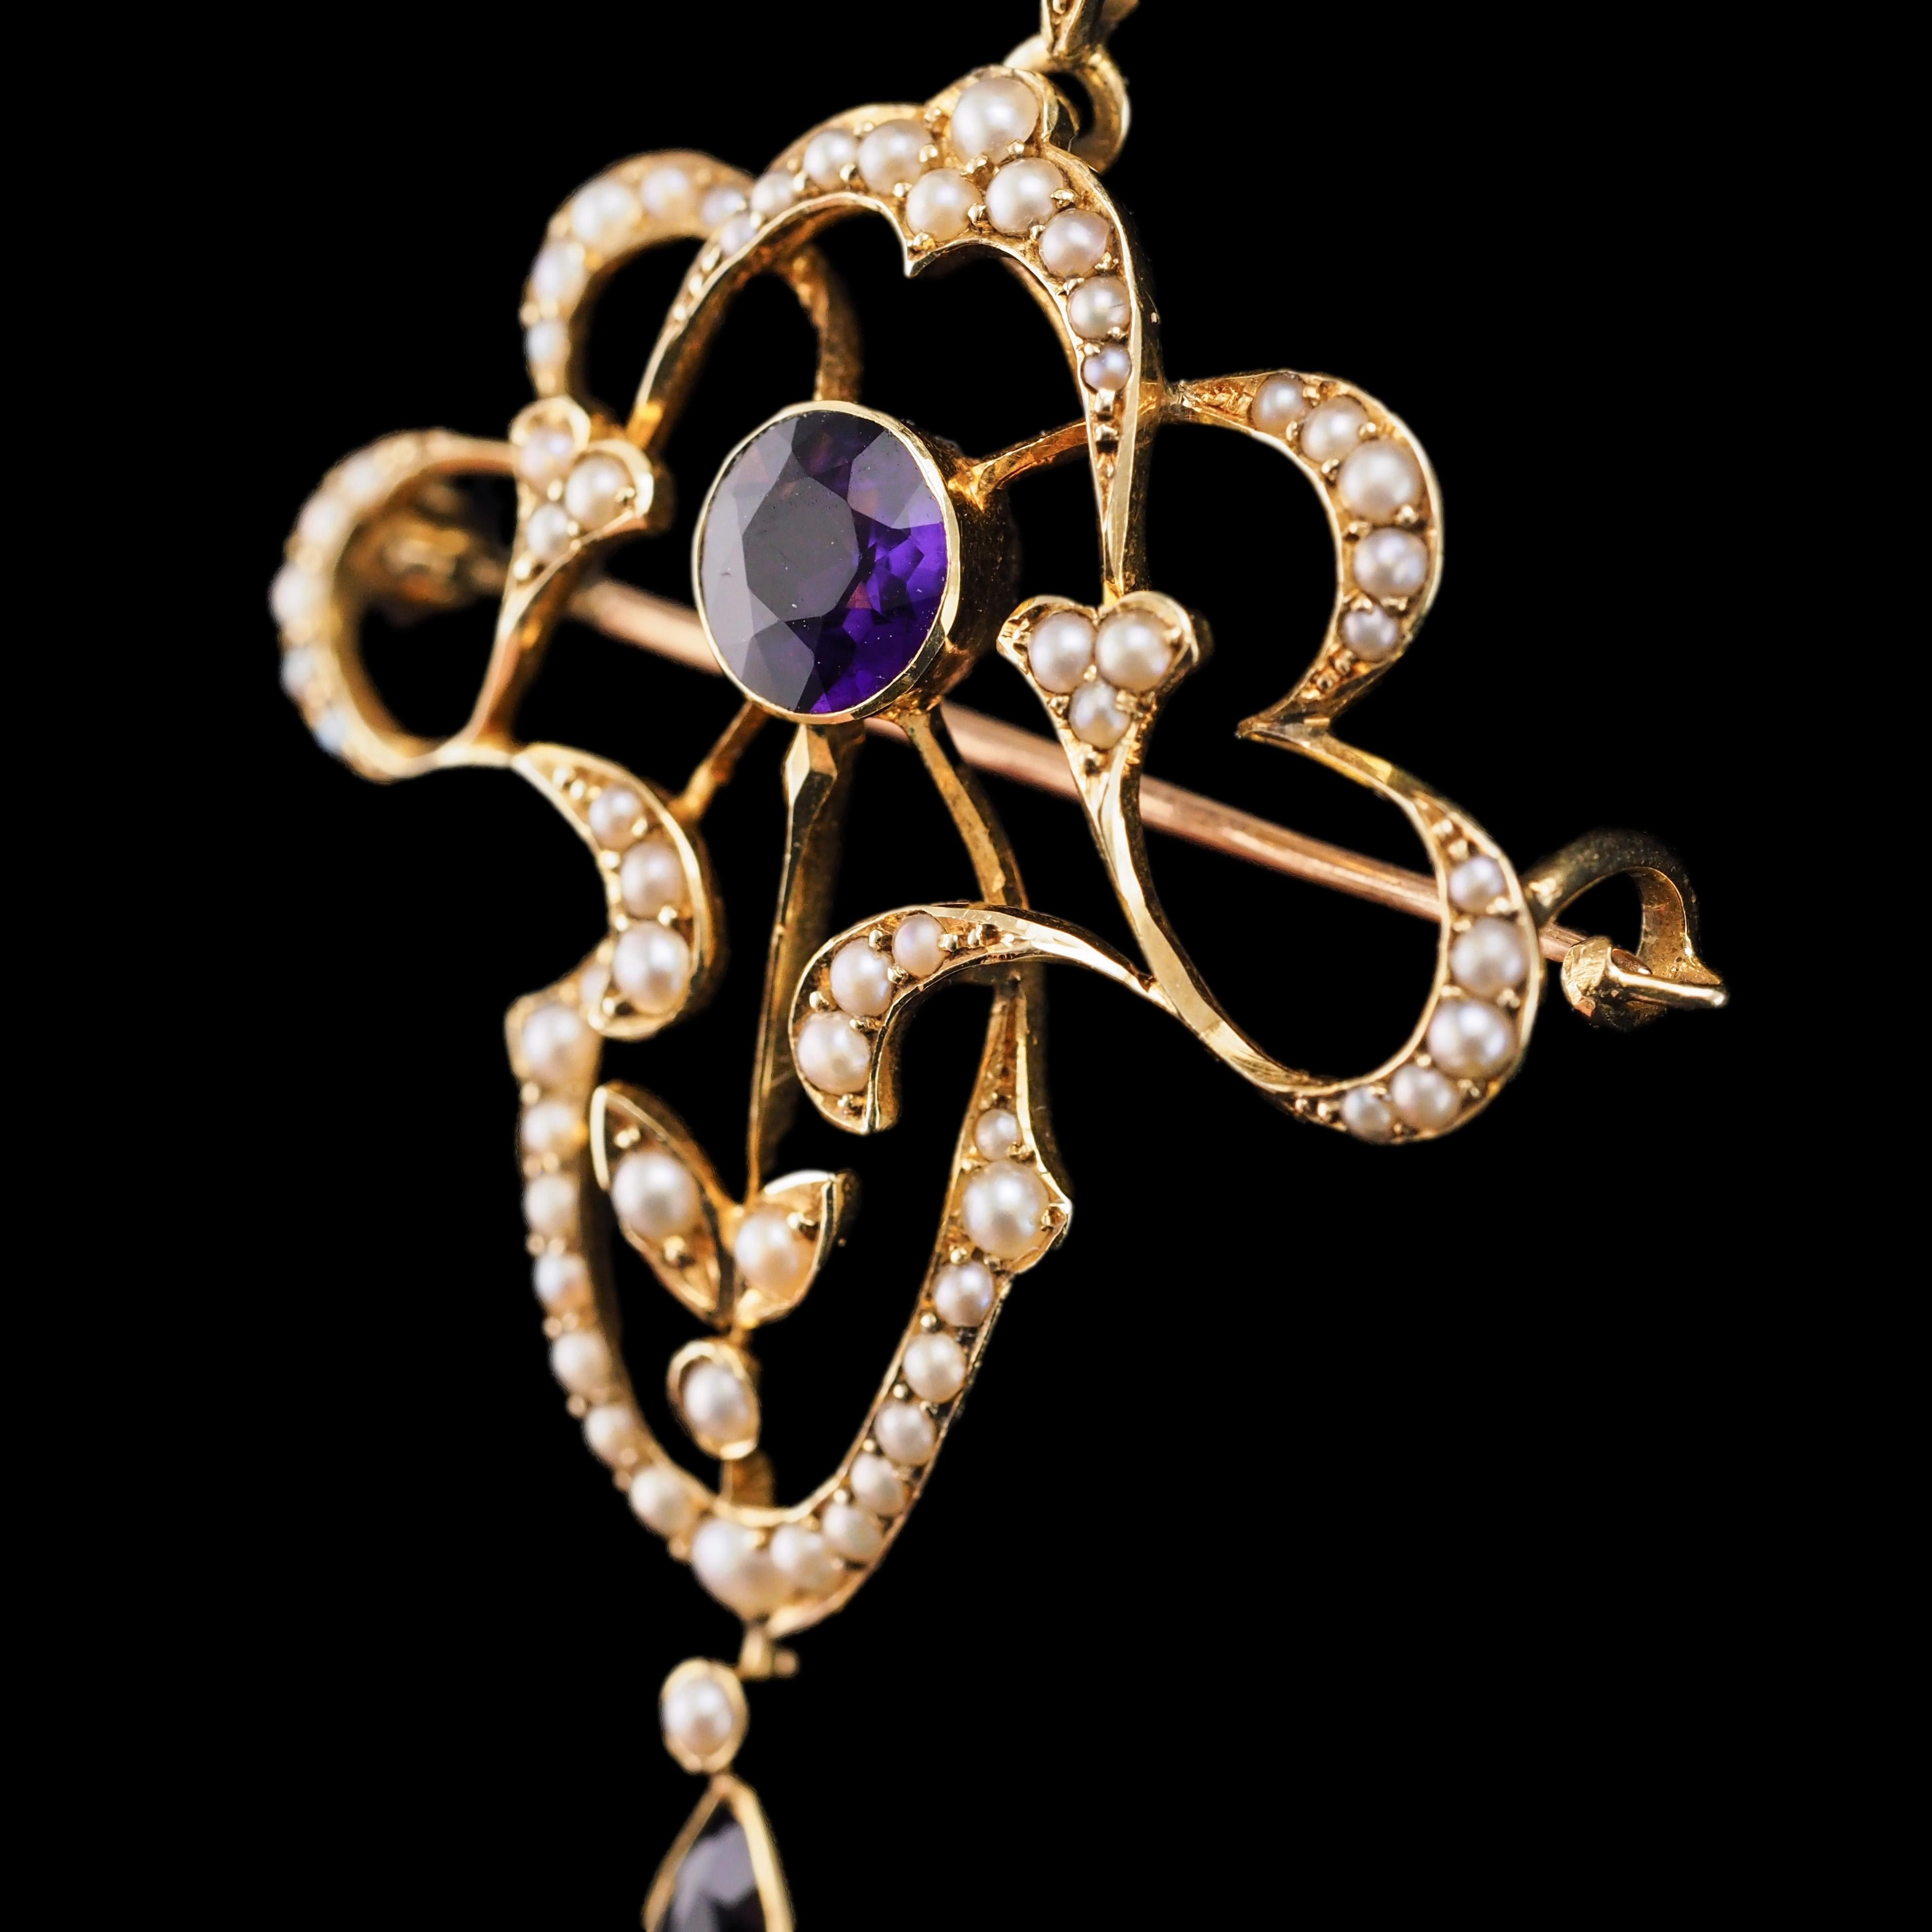 Antique Edwardian Amethyst & Seed Pearl 15K Gold Pendant Necklace Art Nouveau  For Sale 9